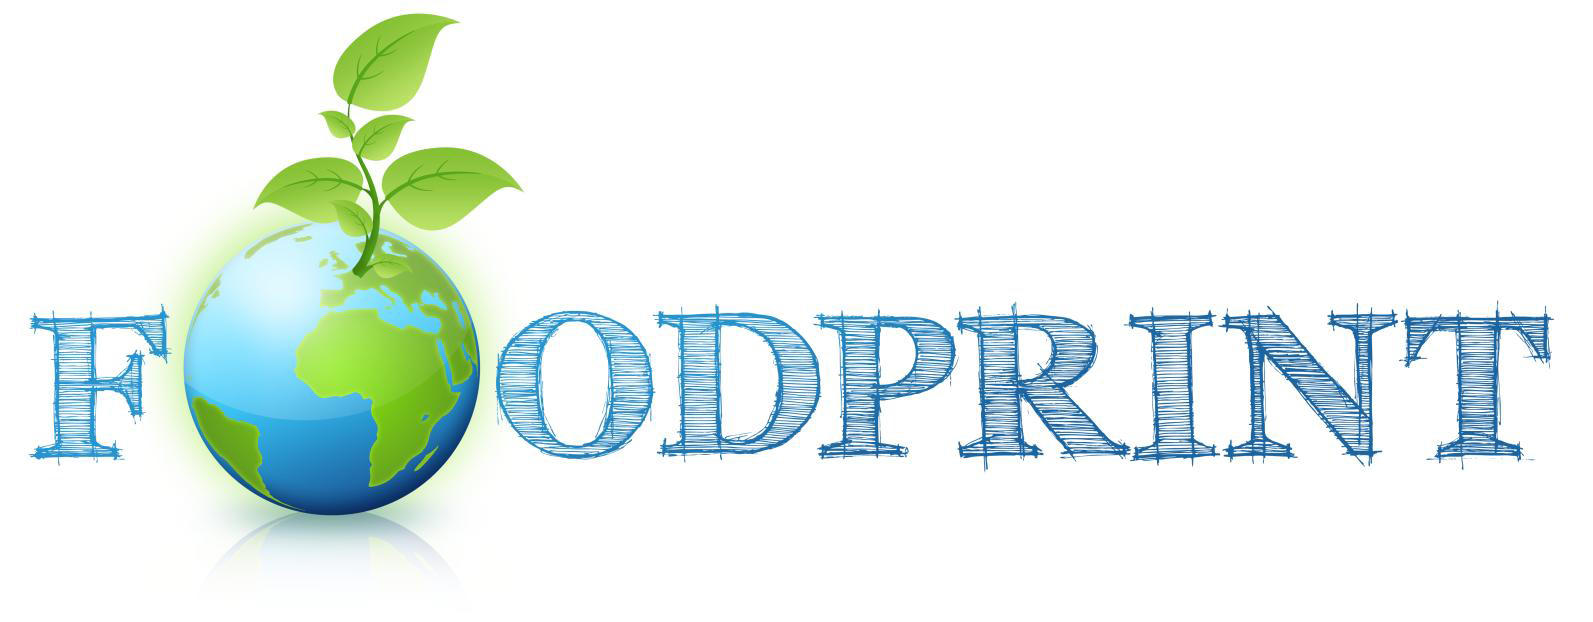 Foodprint logo